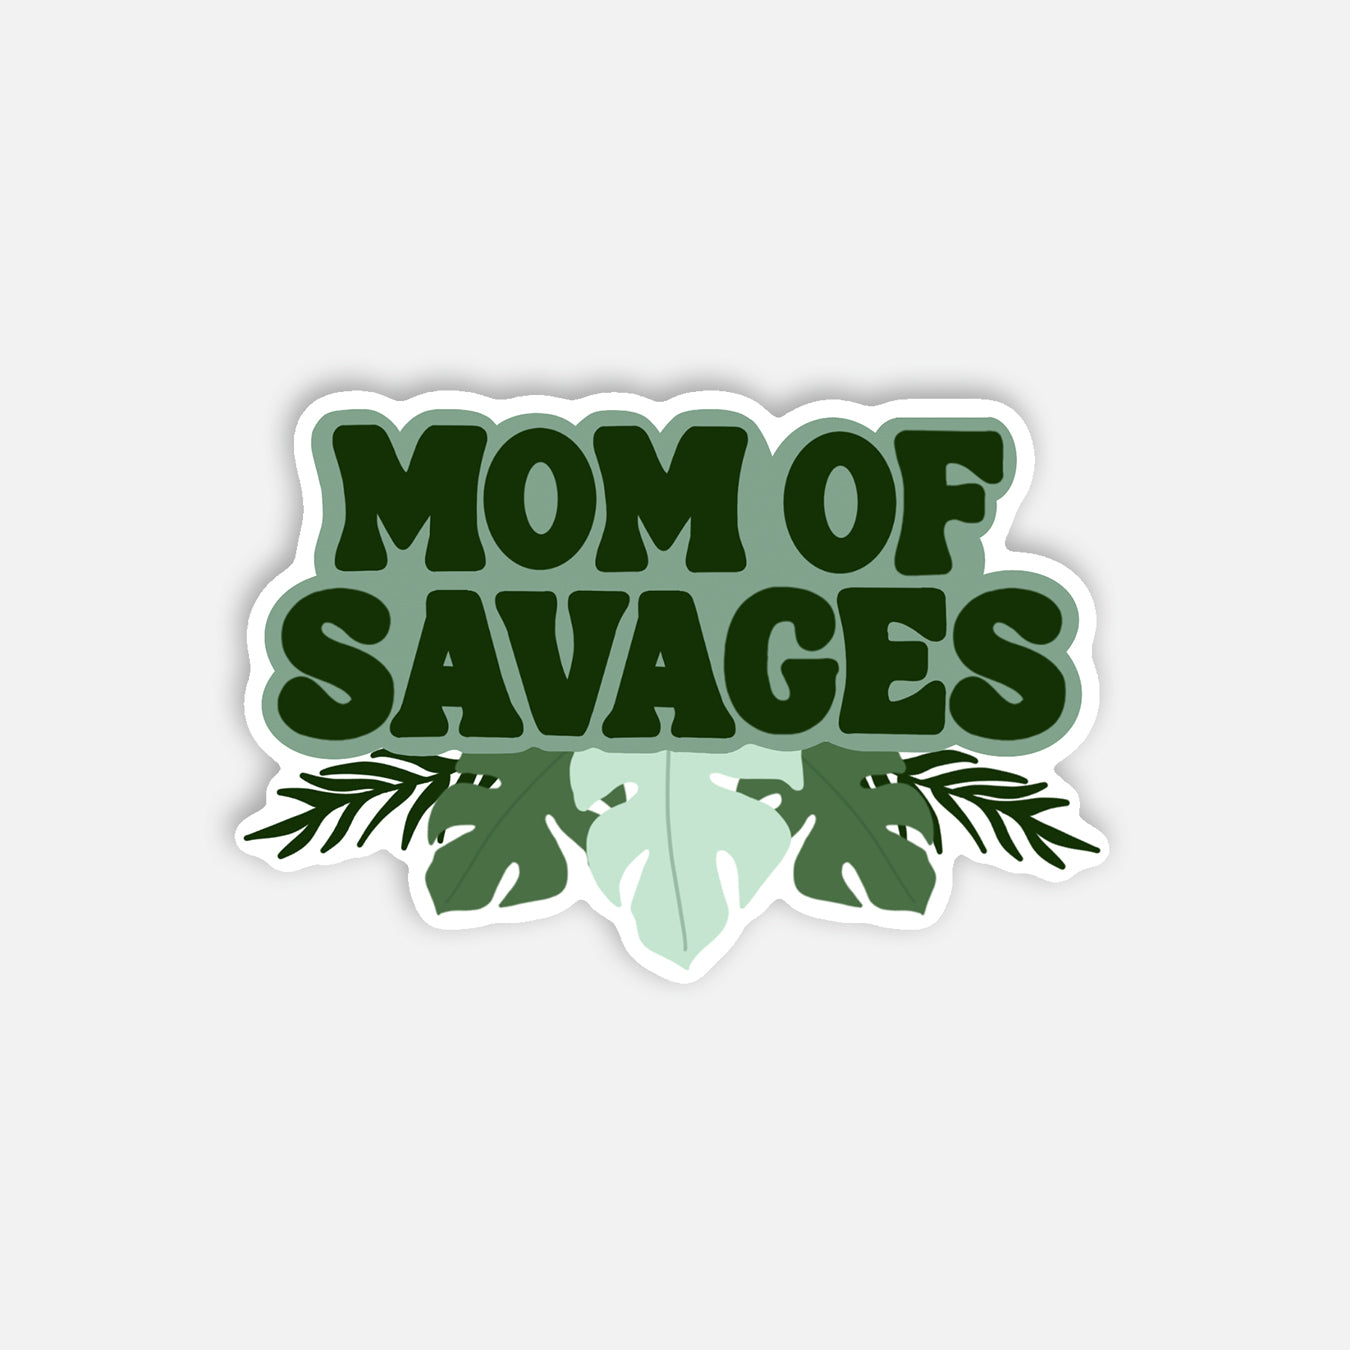 Mom of Savages Vinyl Sticker